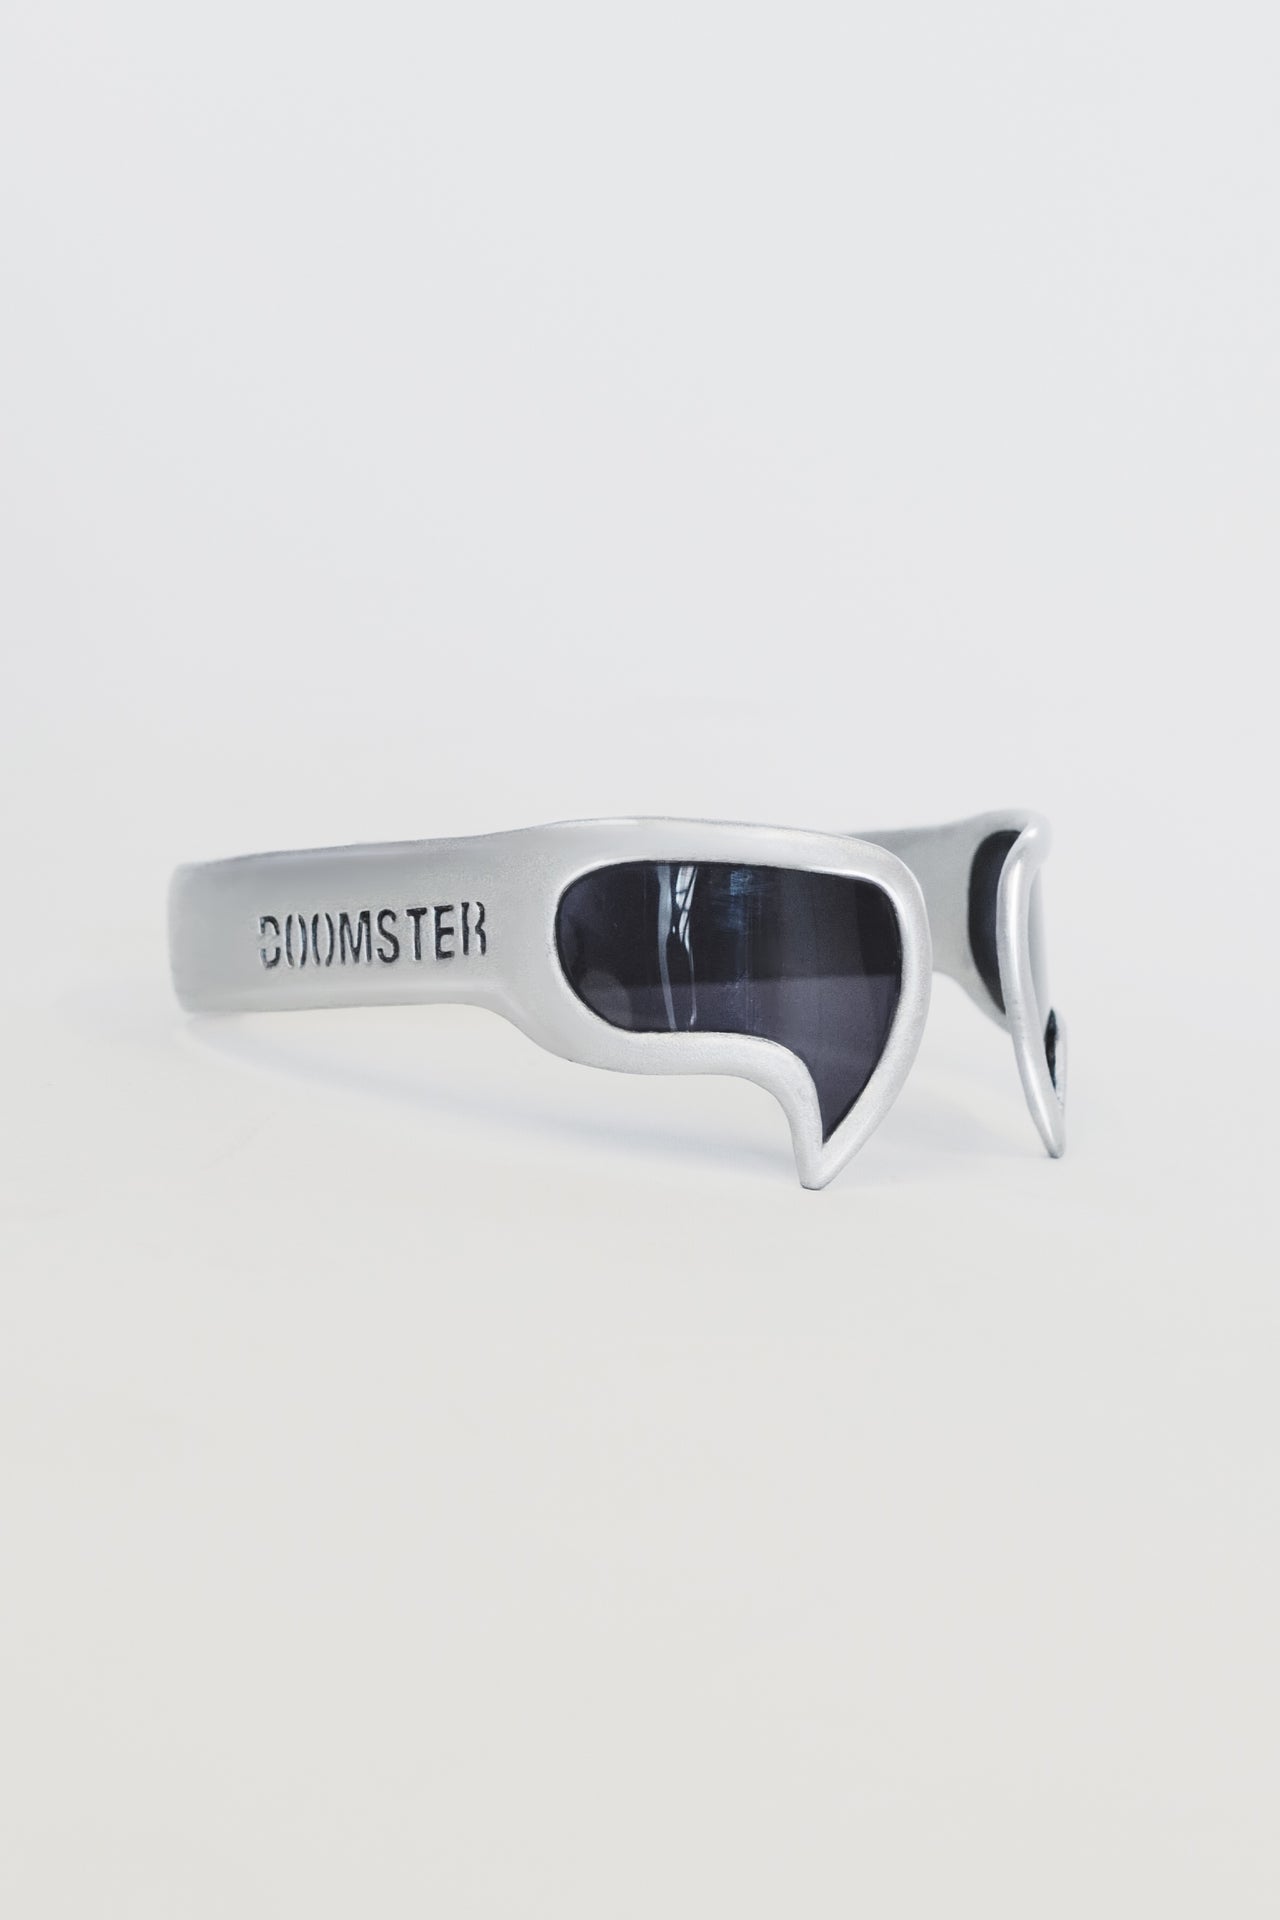 3D Printed Sunglasses (Silver)